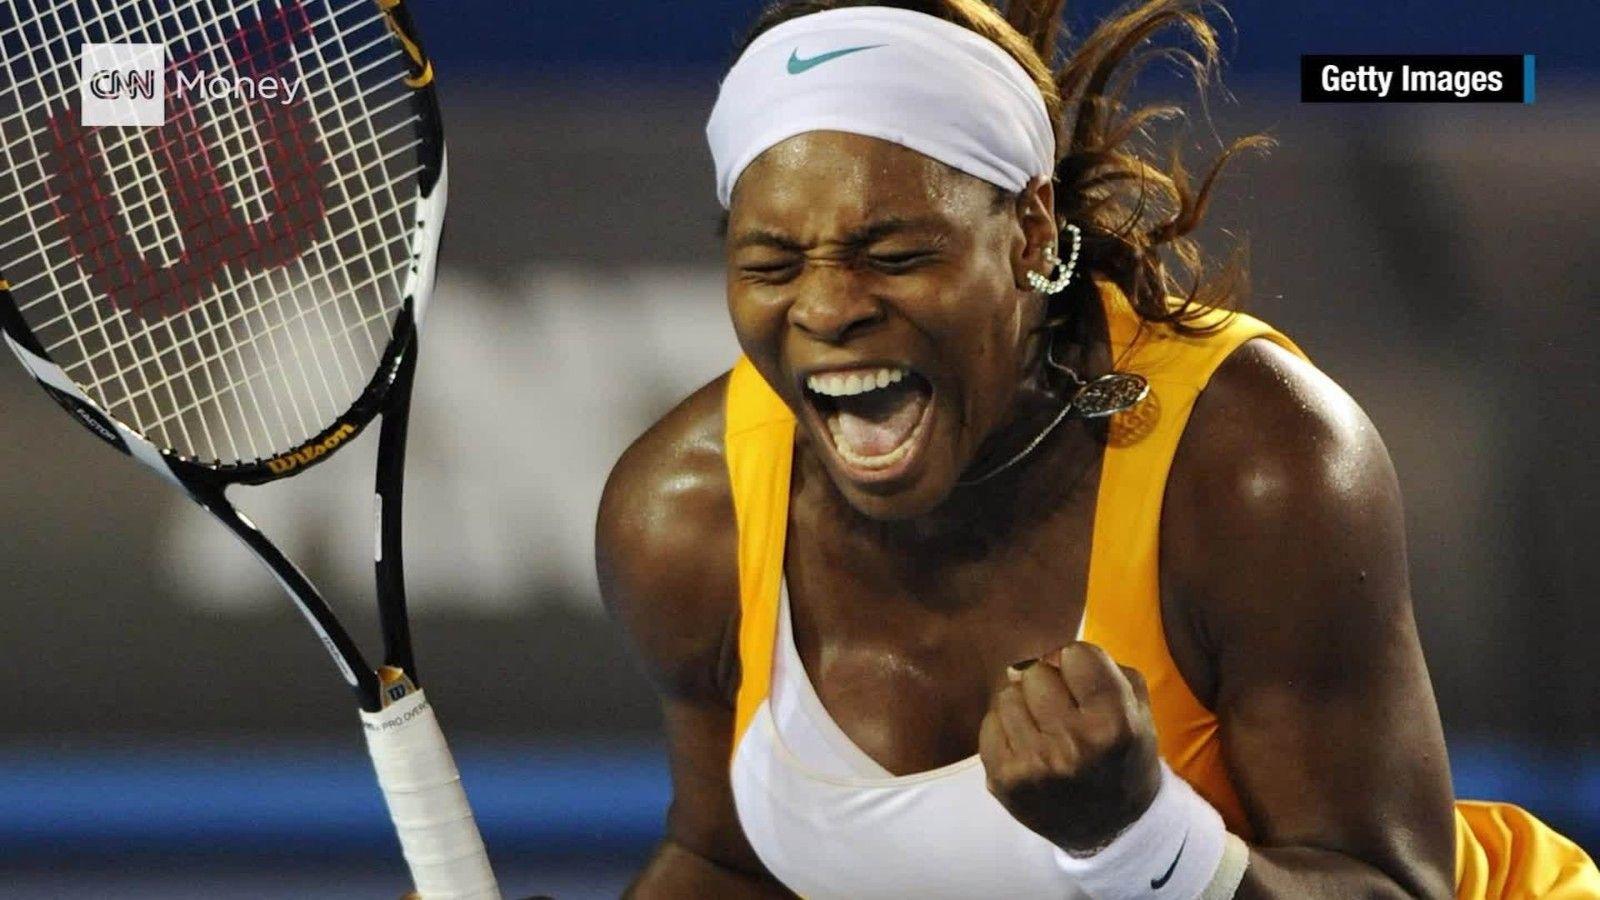 Serena Williams wins Wimbledon for historic 22nd major